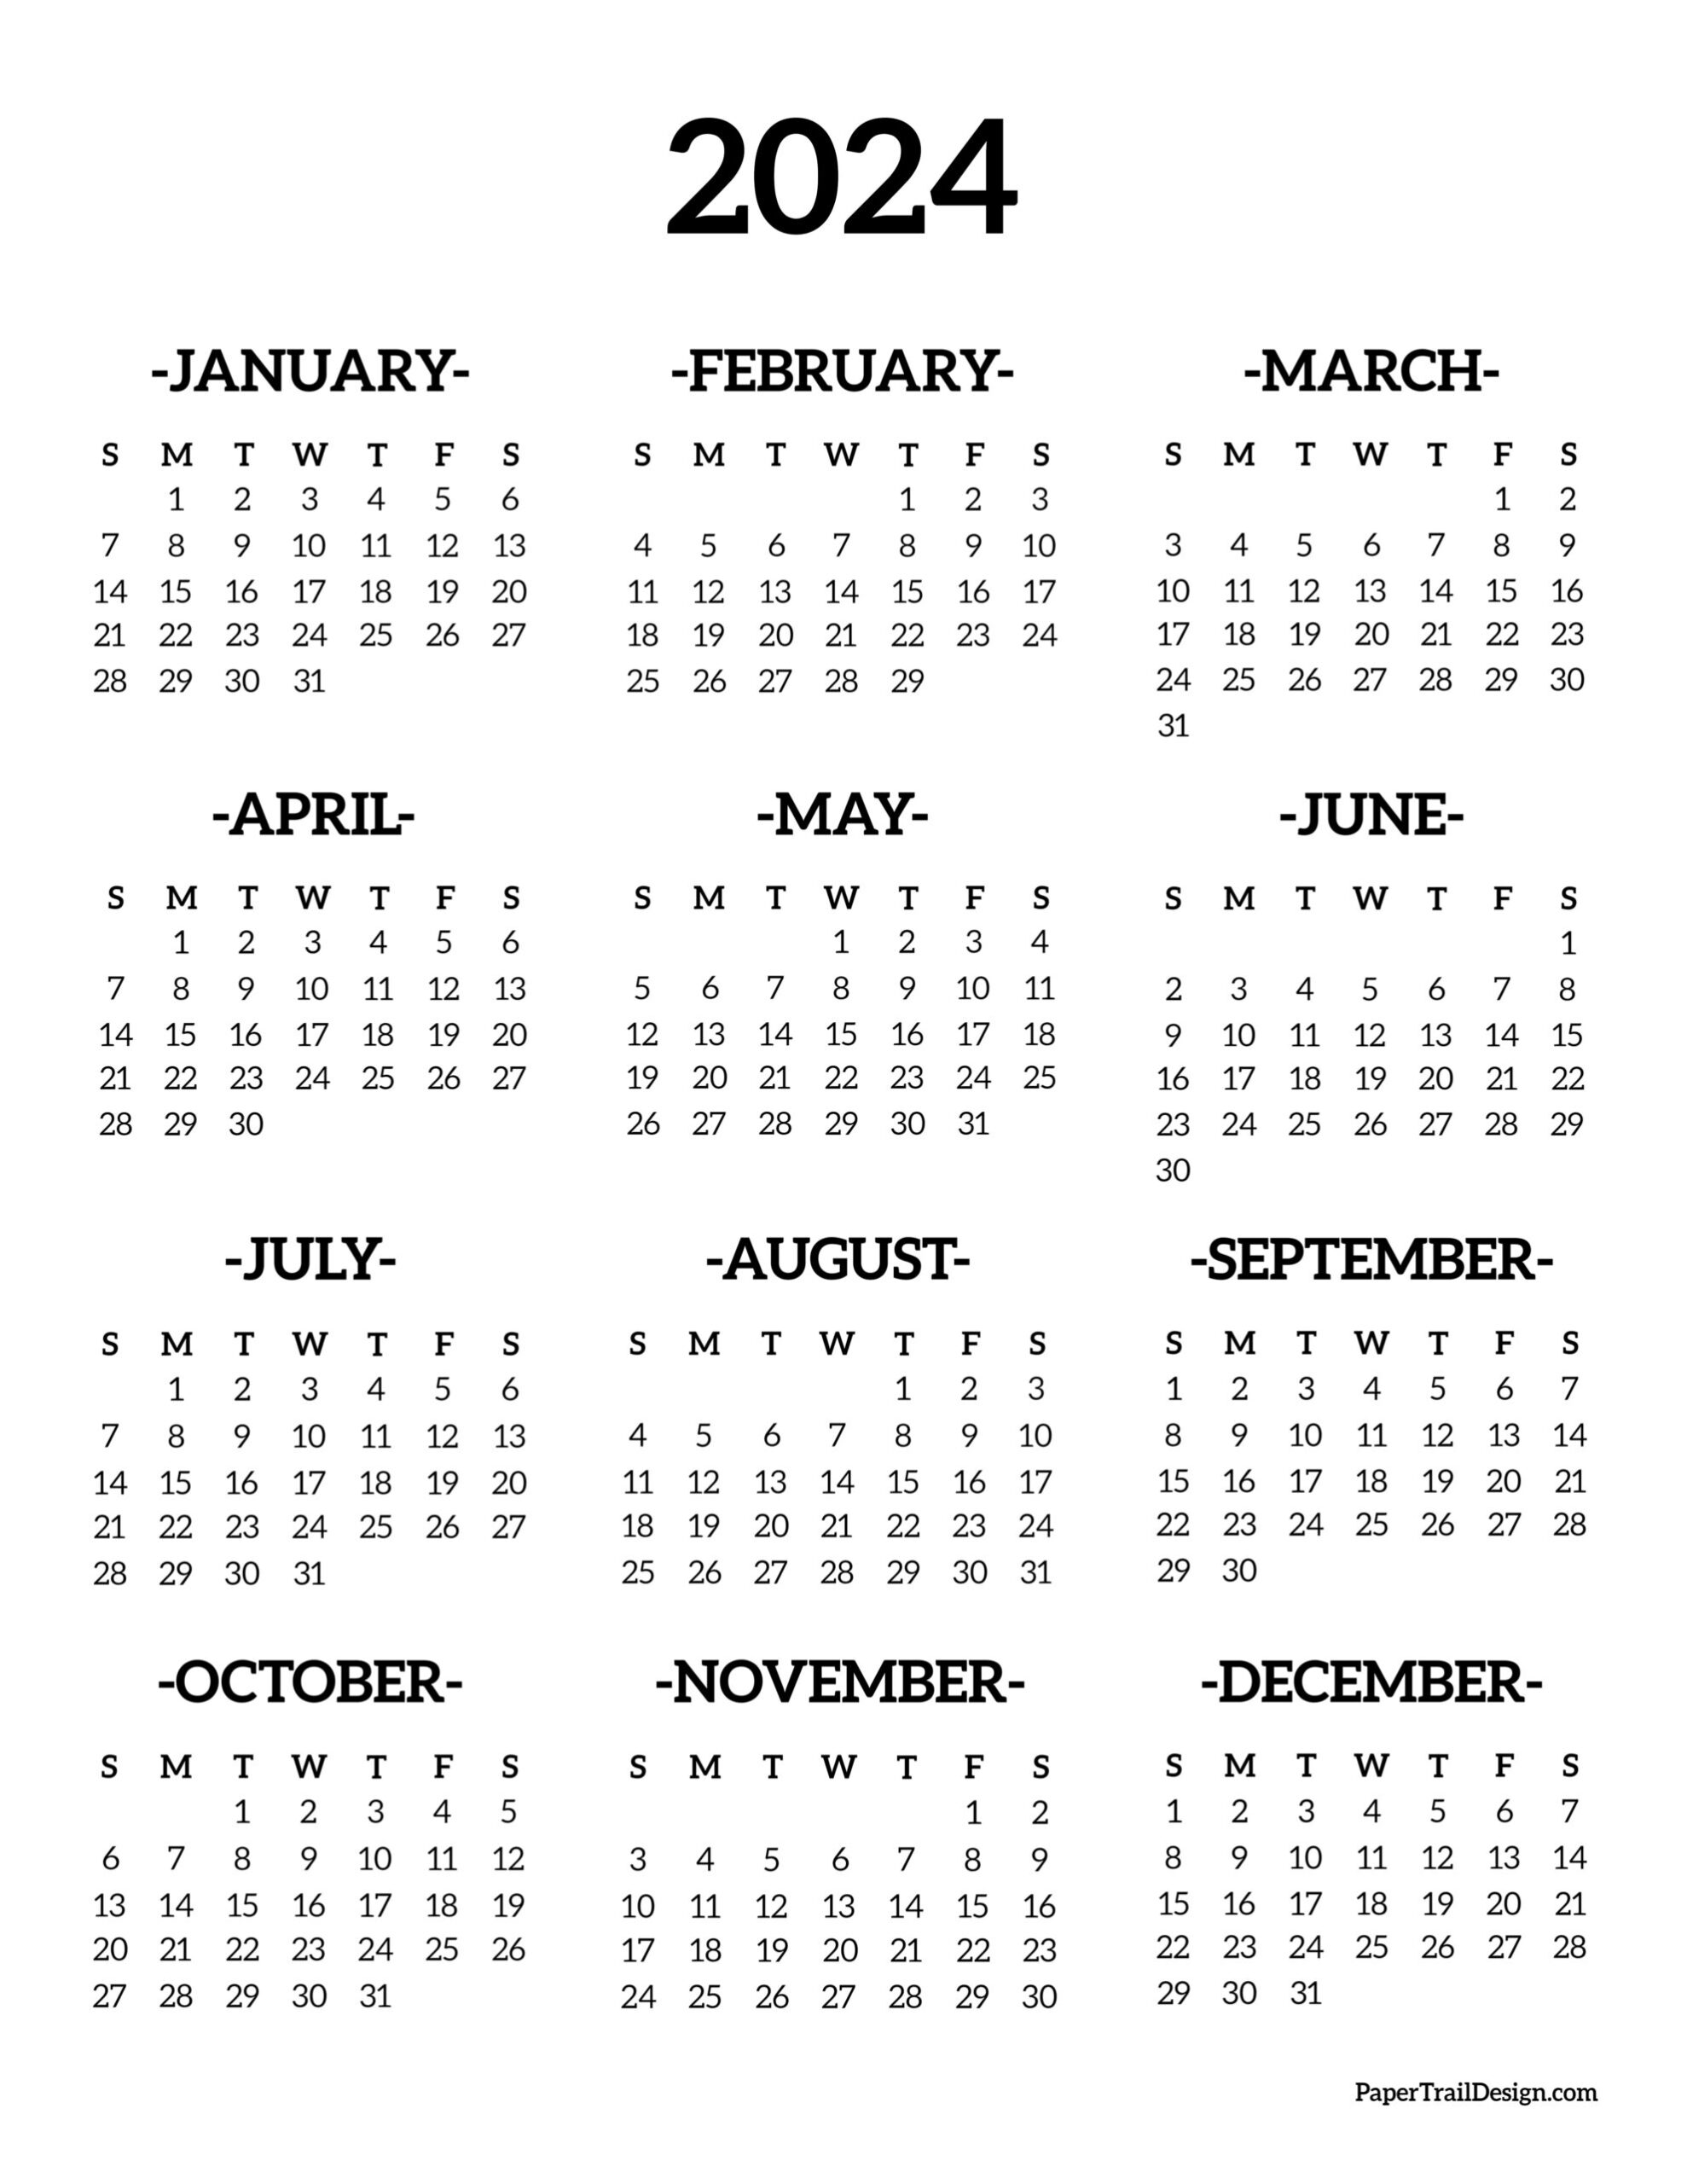 Calendar 2024 Printable One Page - Paper Trail Design for 2024 Printable Annual Calendar